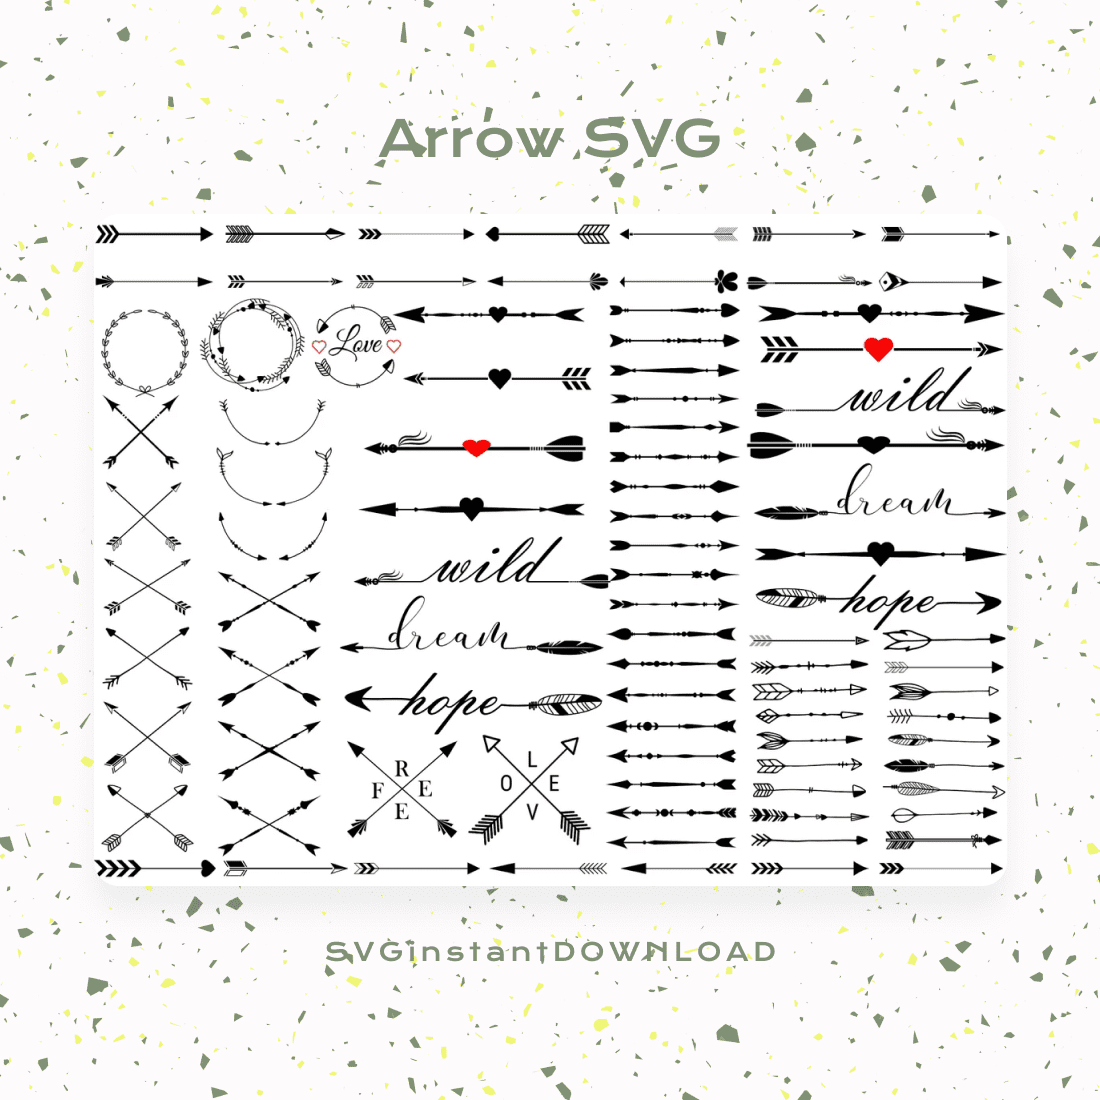 Arrow SVG Files image.